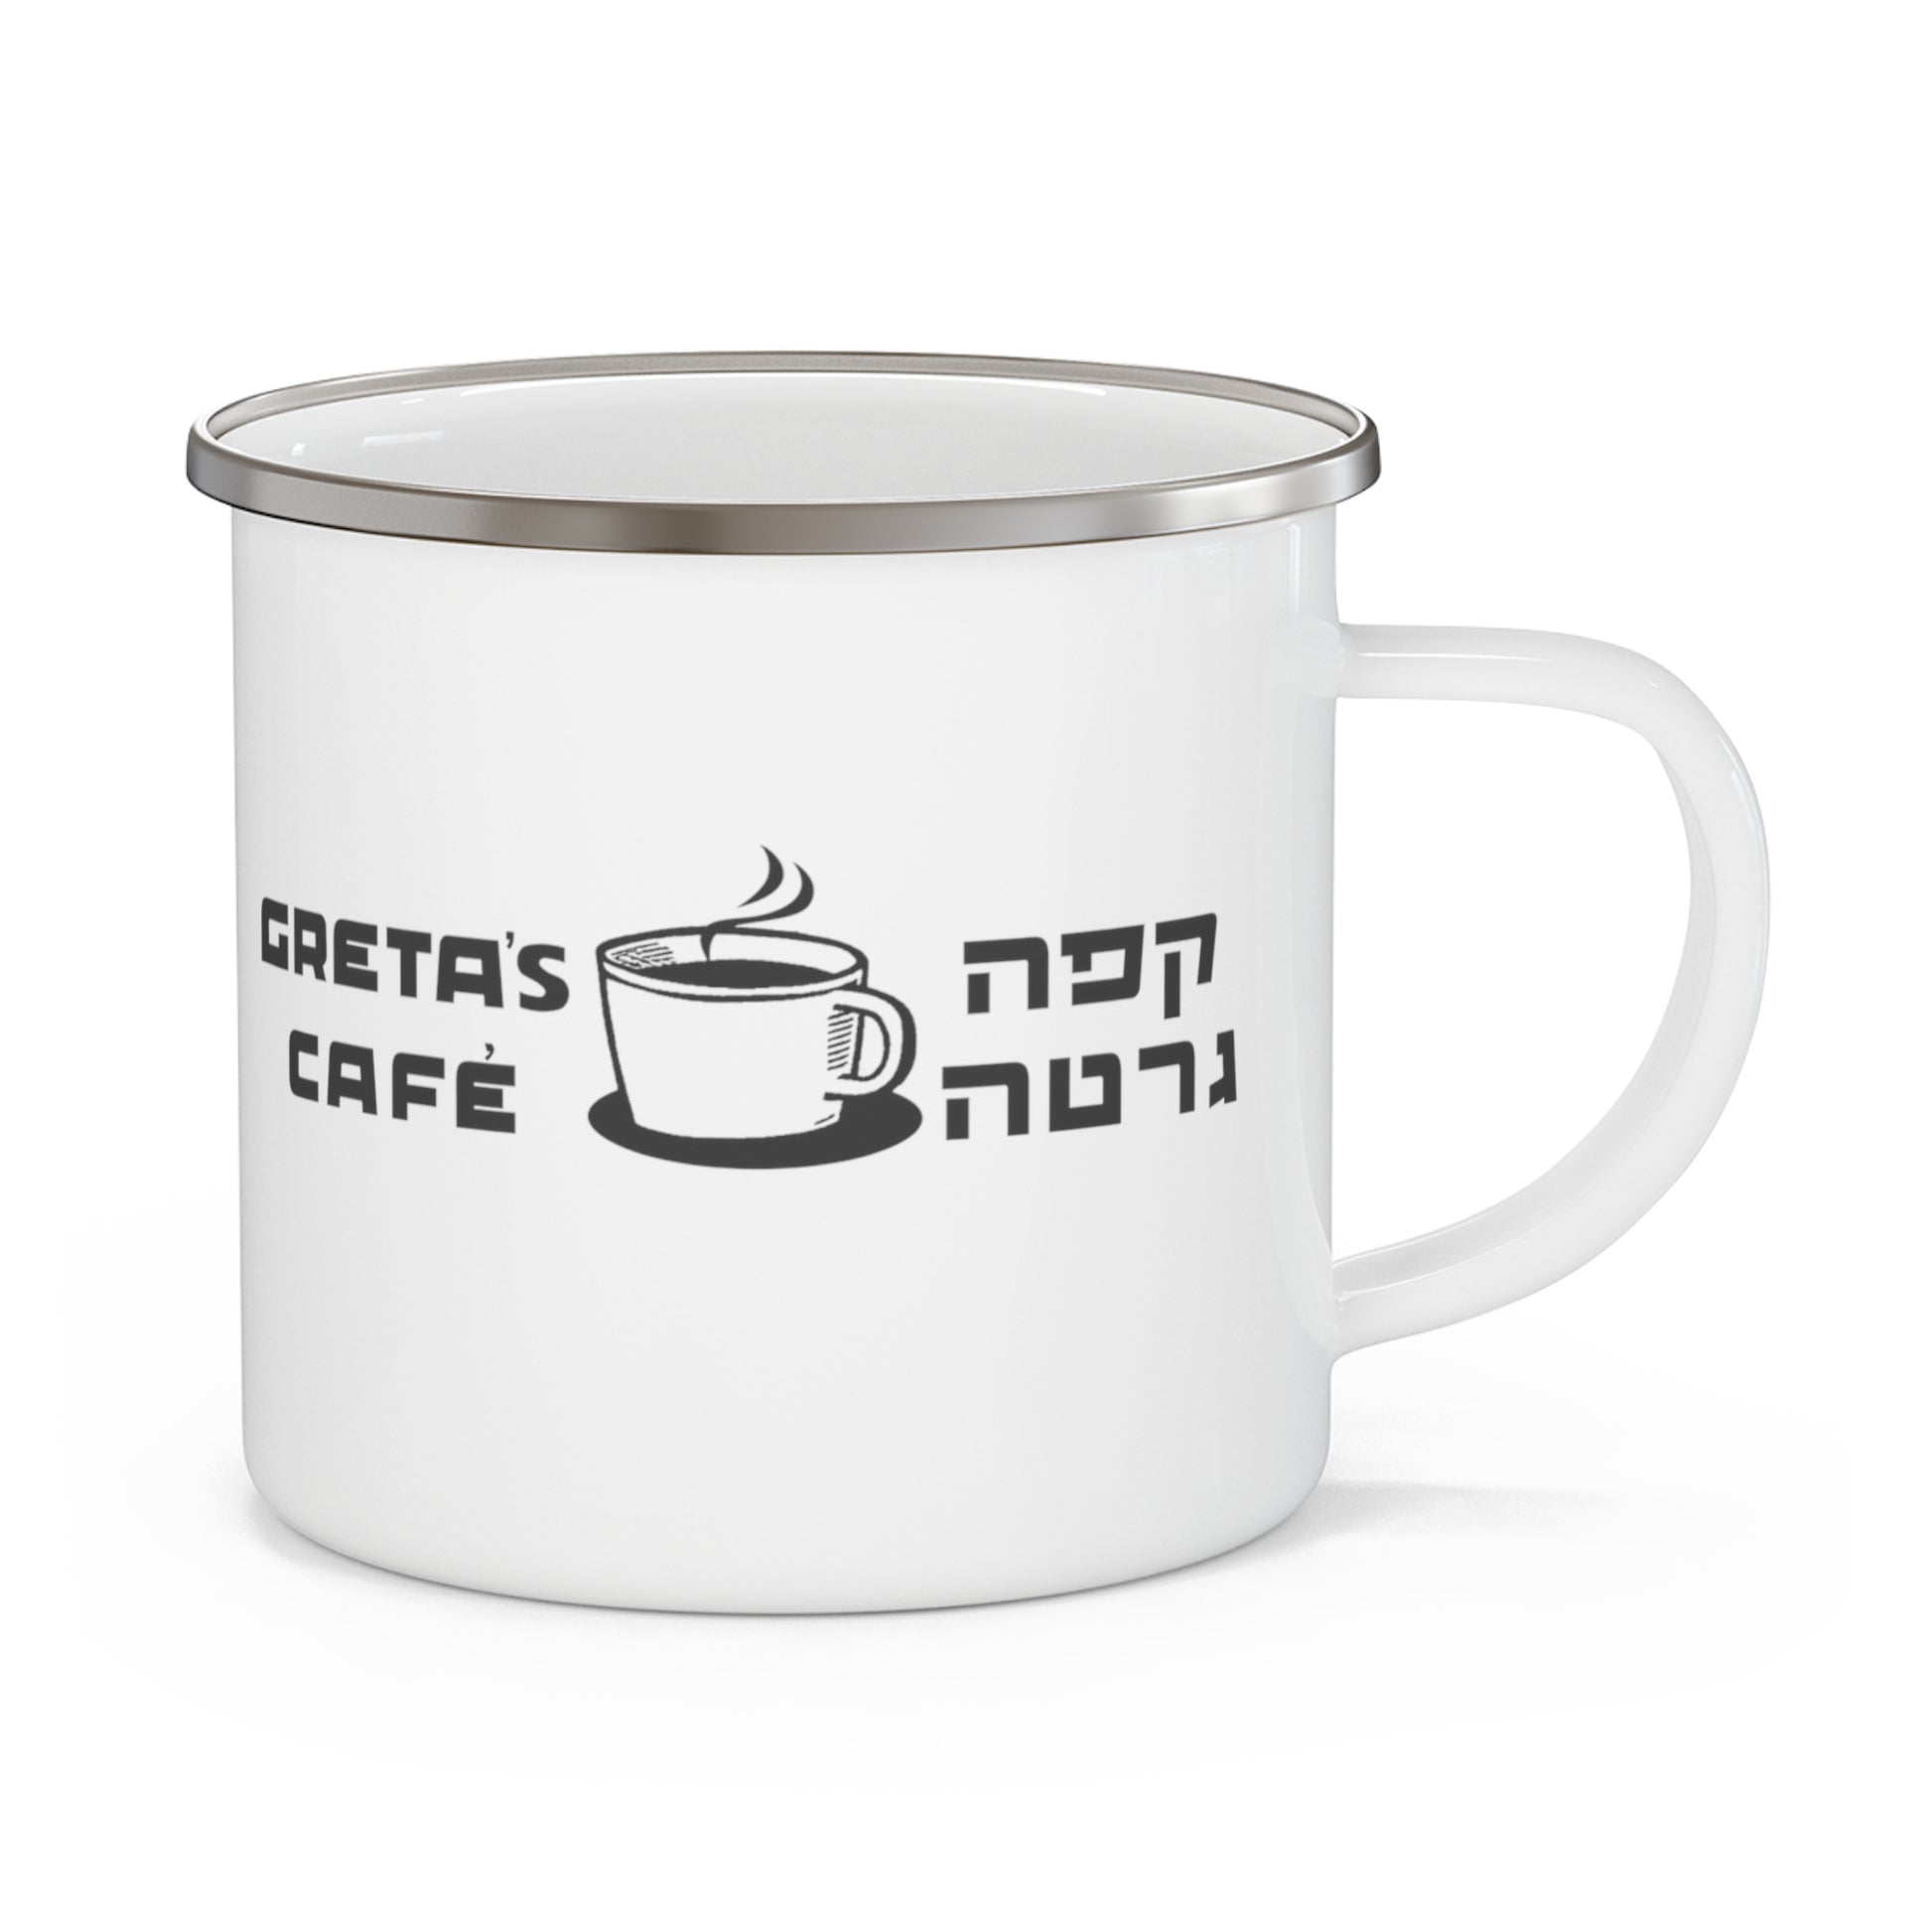 Greta's Cafe Enamel Mug - 12oz